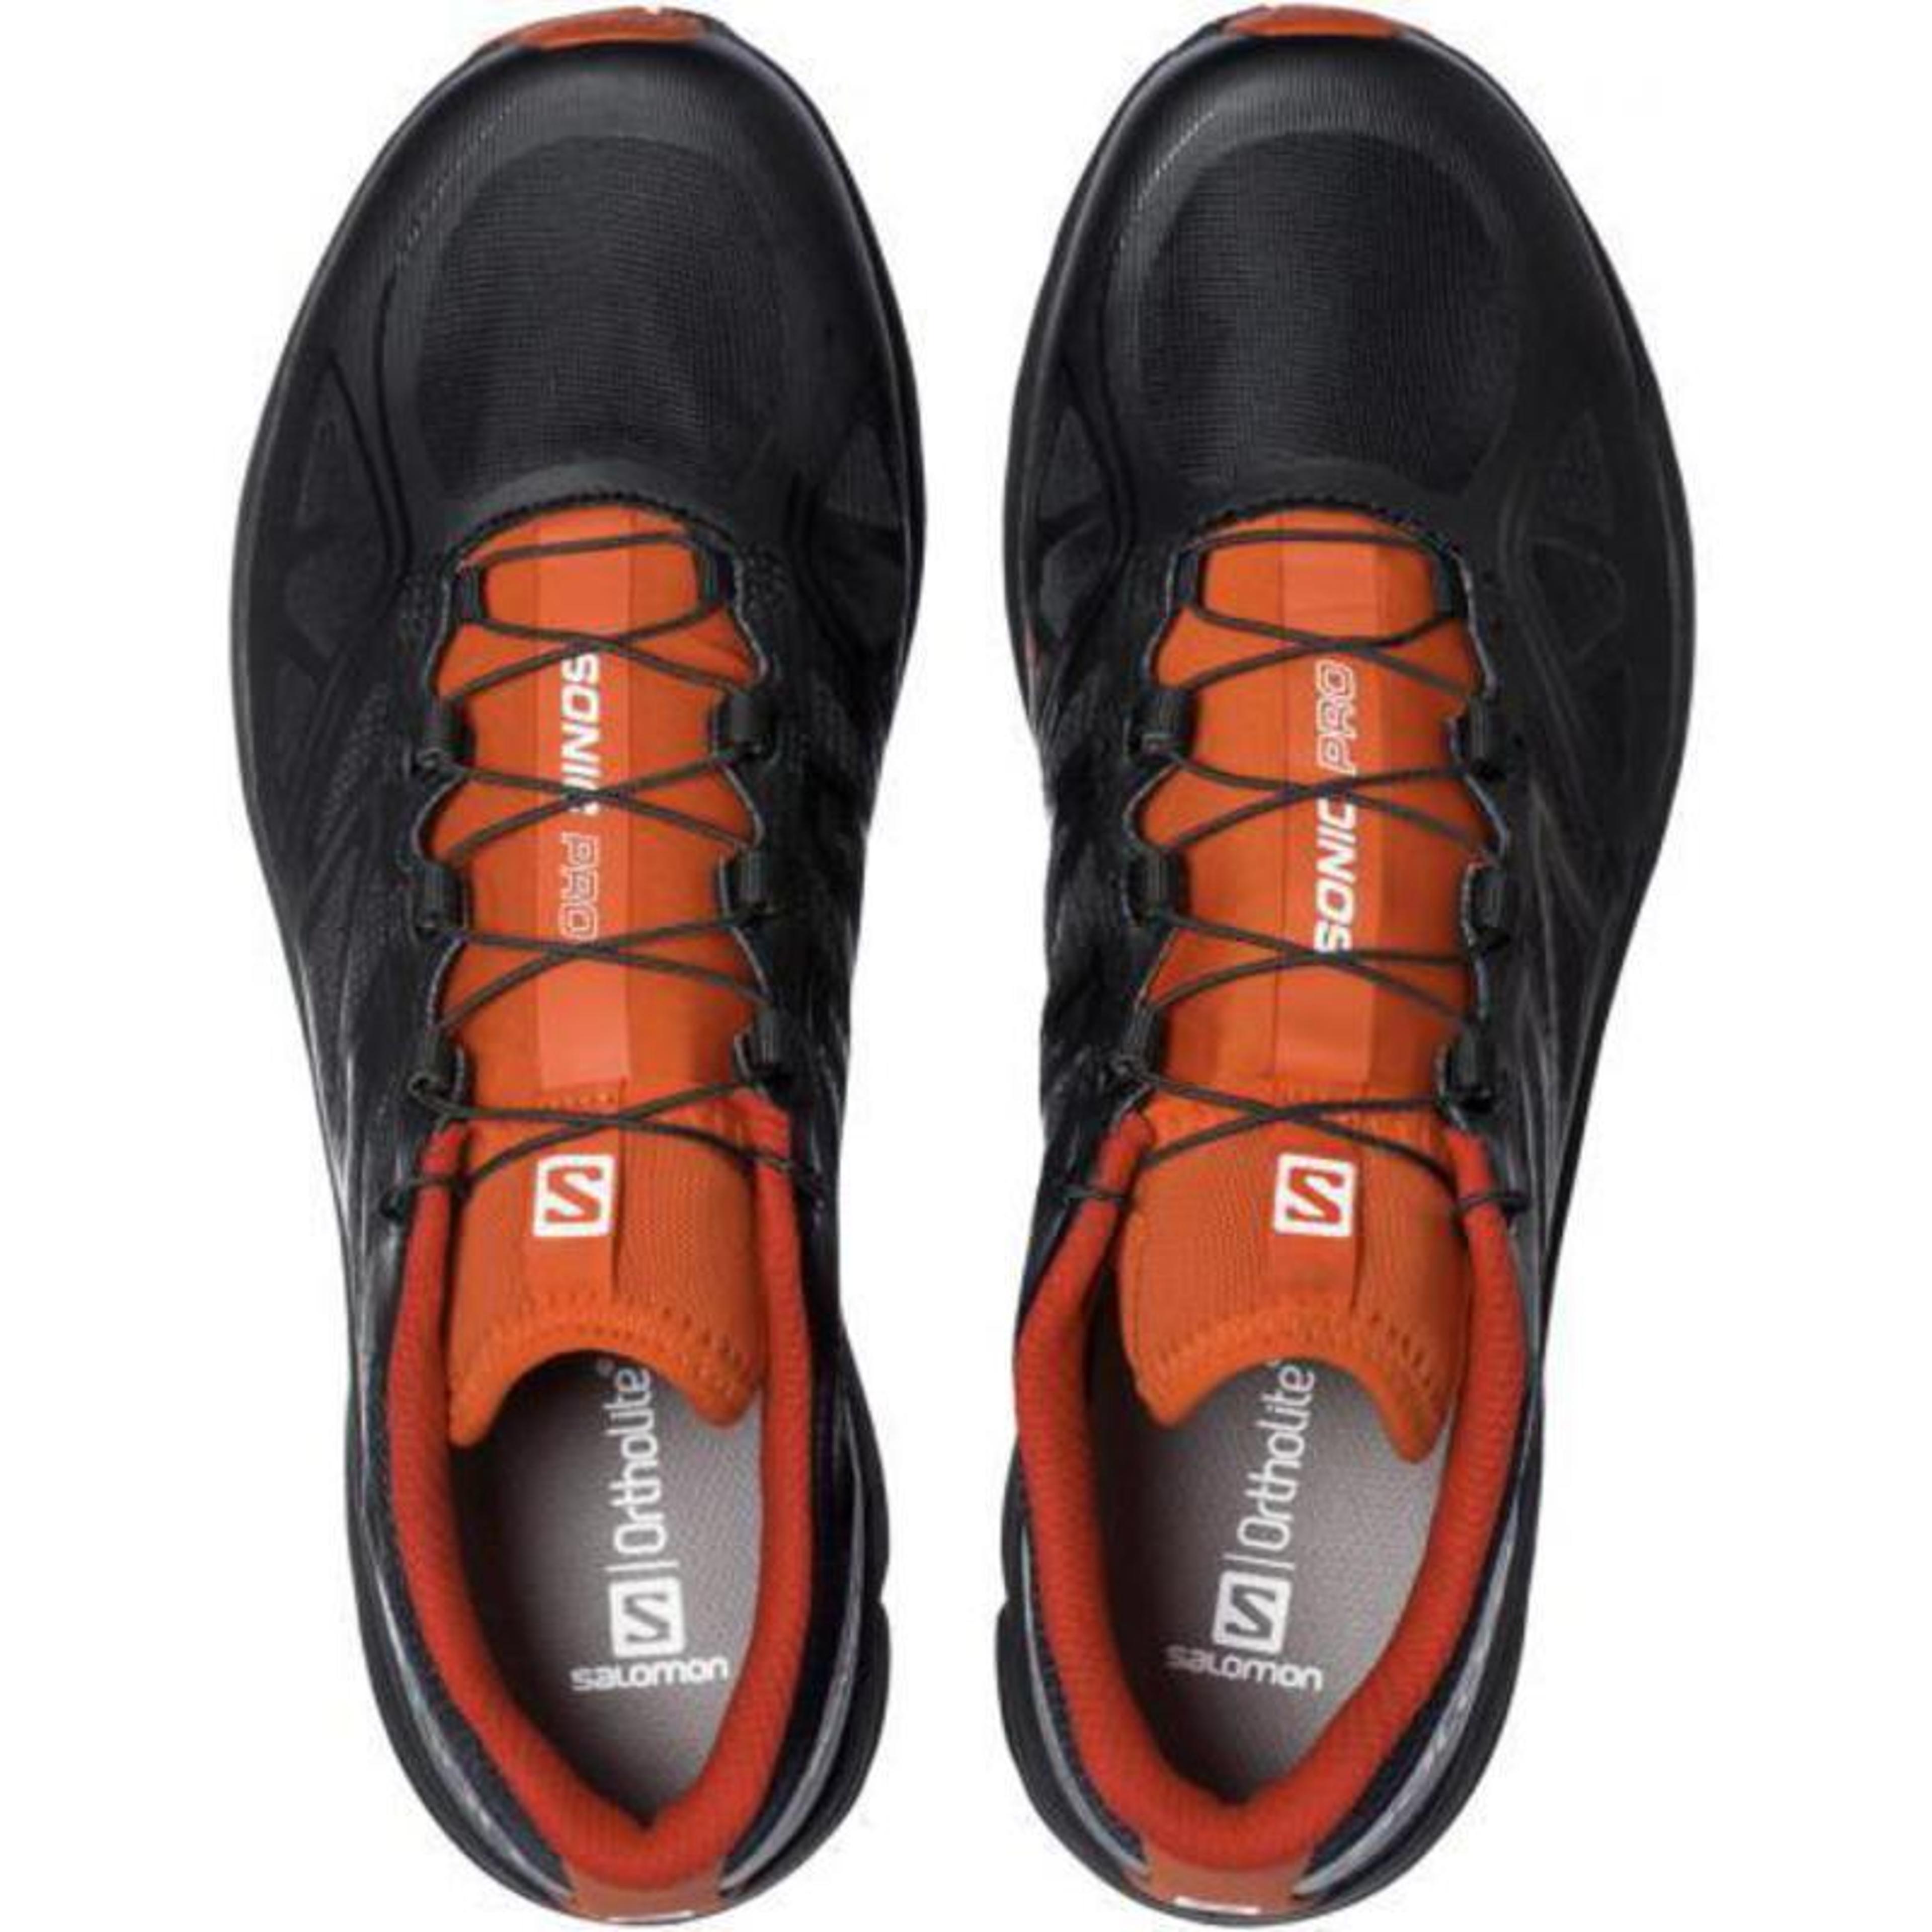 Alternate View 3 of Men's Salomon Sonic Pro Athletic Running Sneakers 379230 Black/T